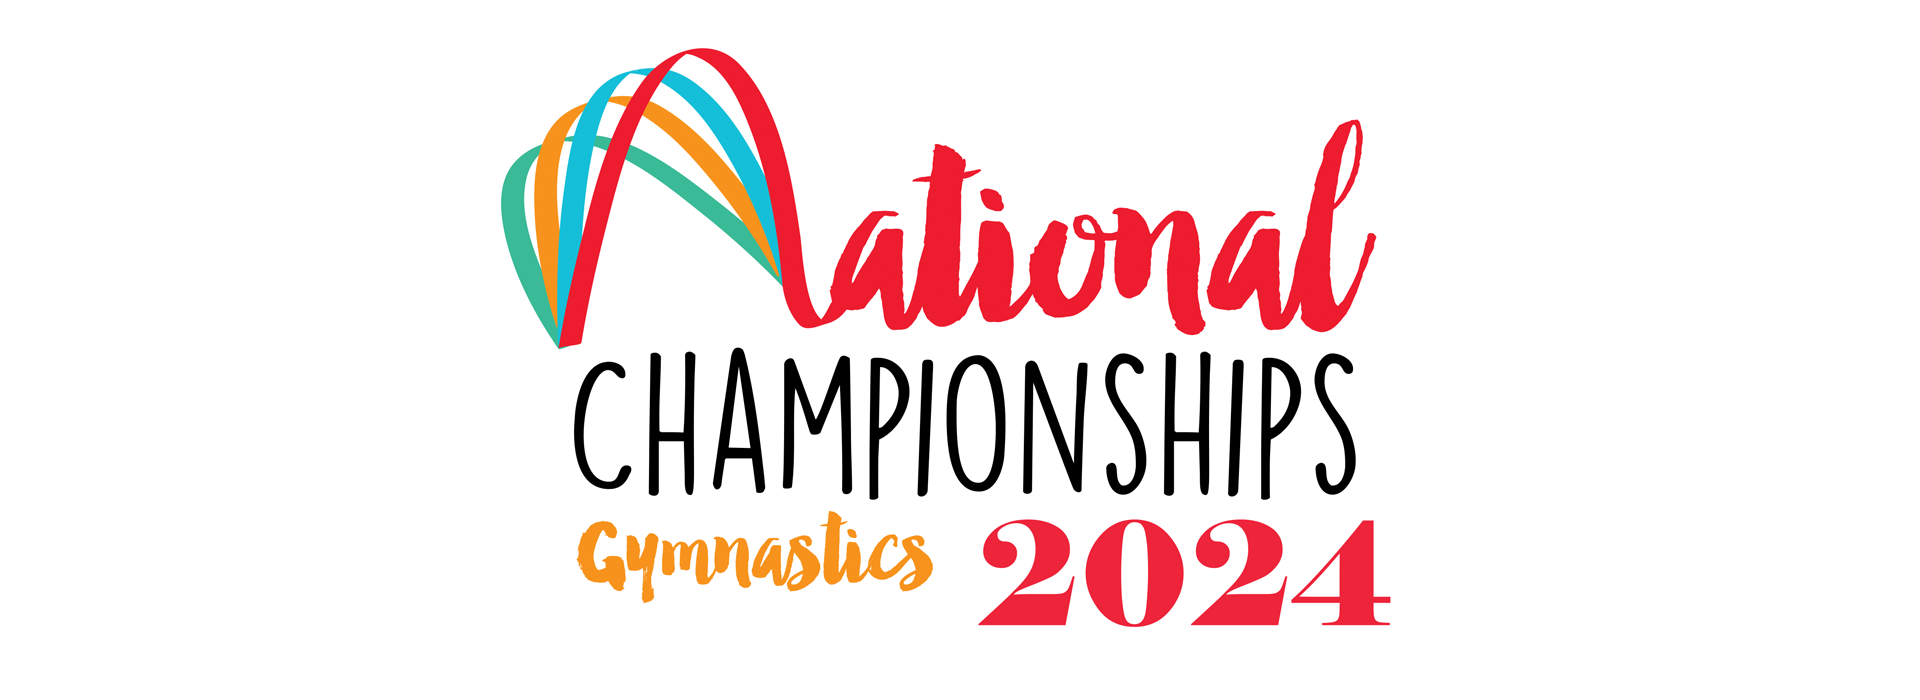 National Championships Gymnastics 2024